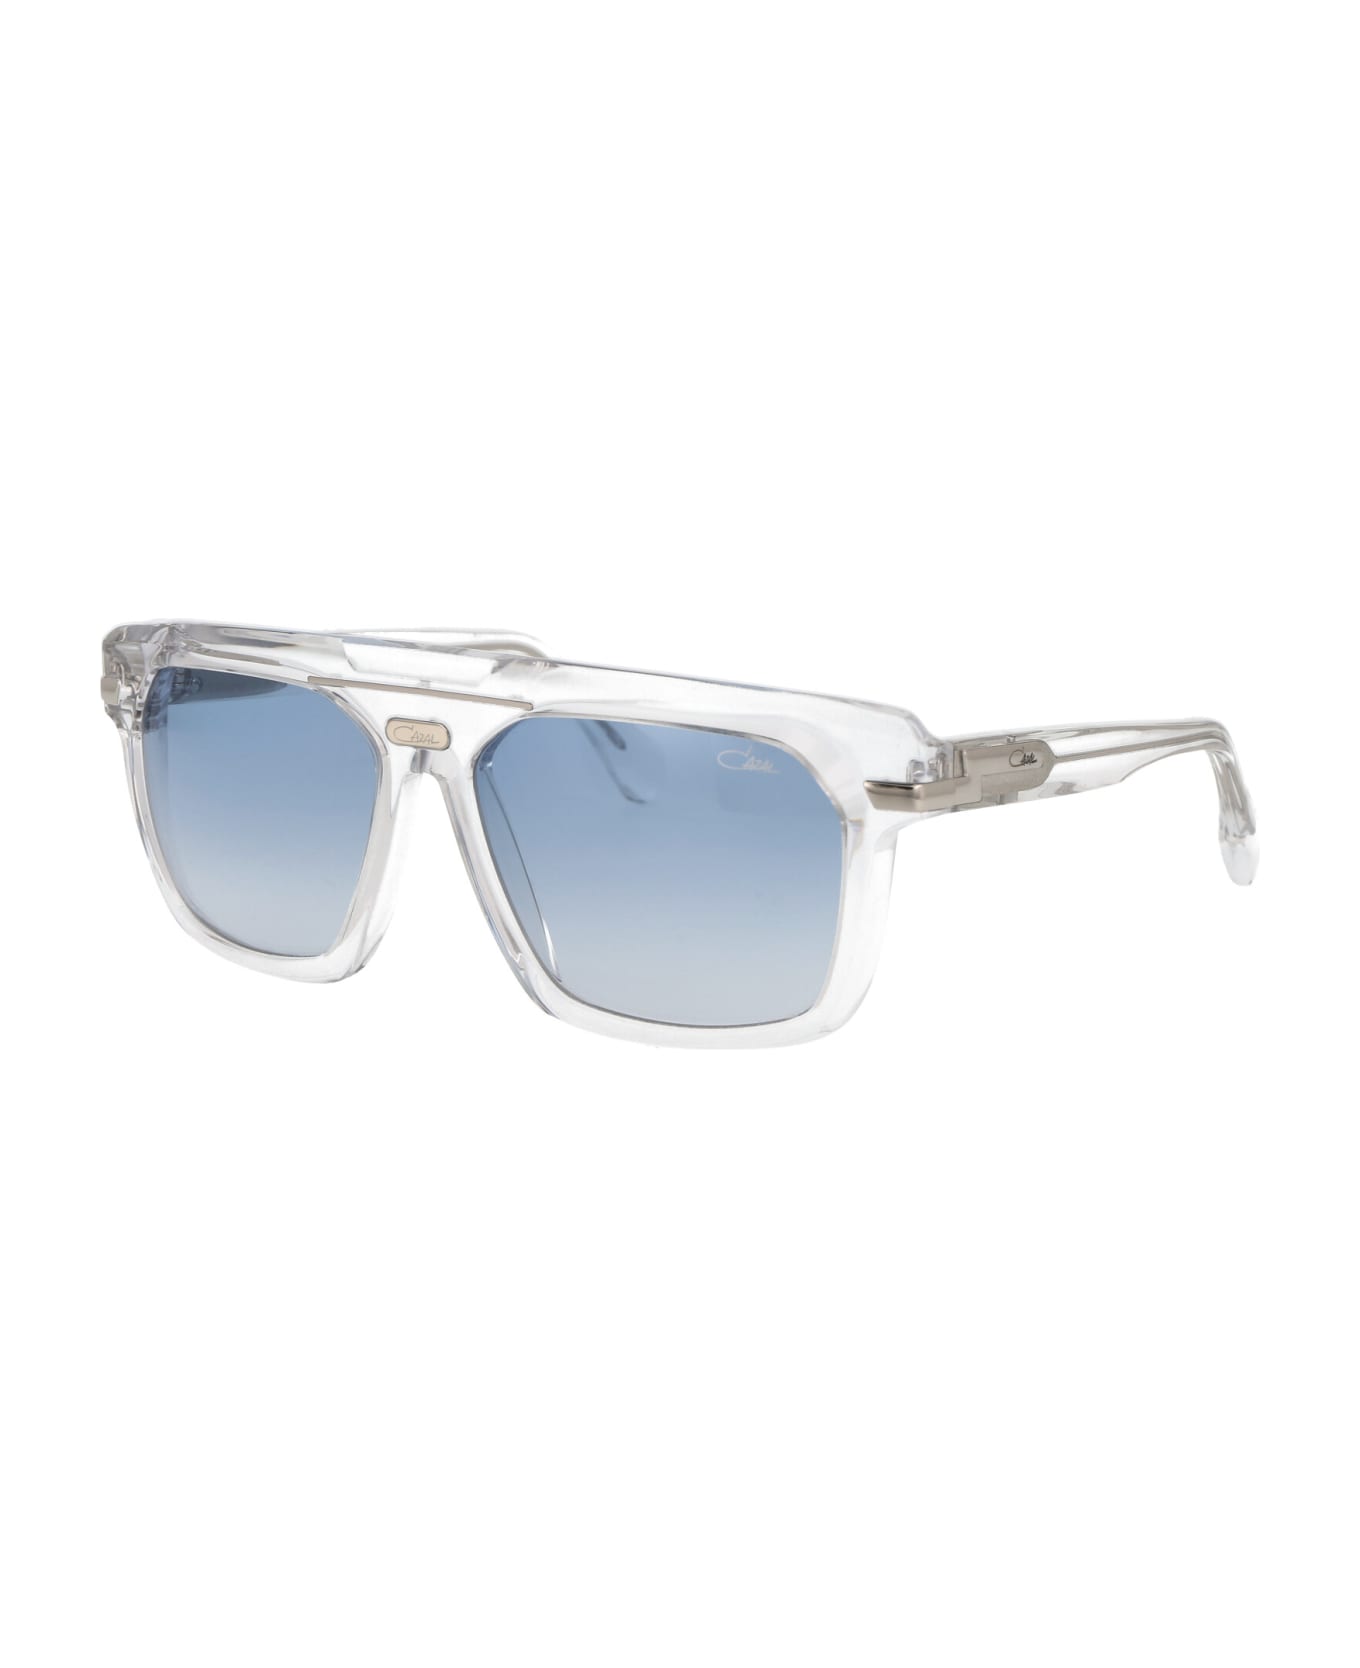 Cazal Mod. 8040 Sunglasses - 002 CRYSTAL サングラス